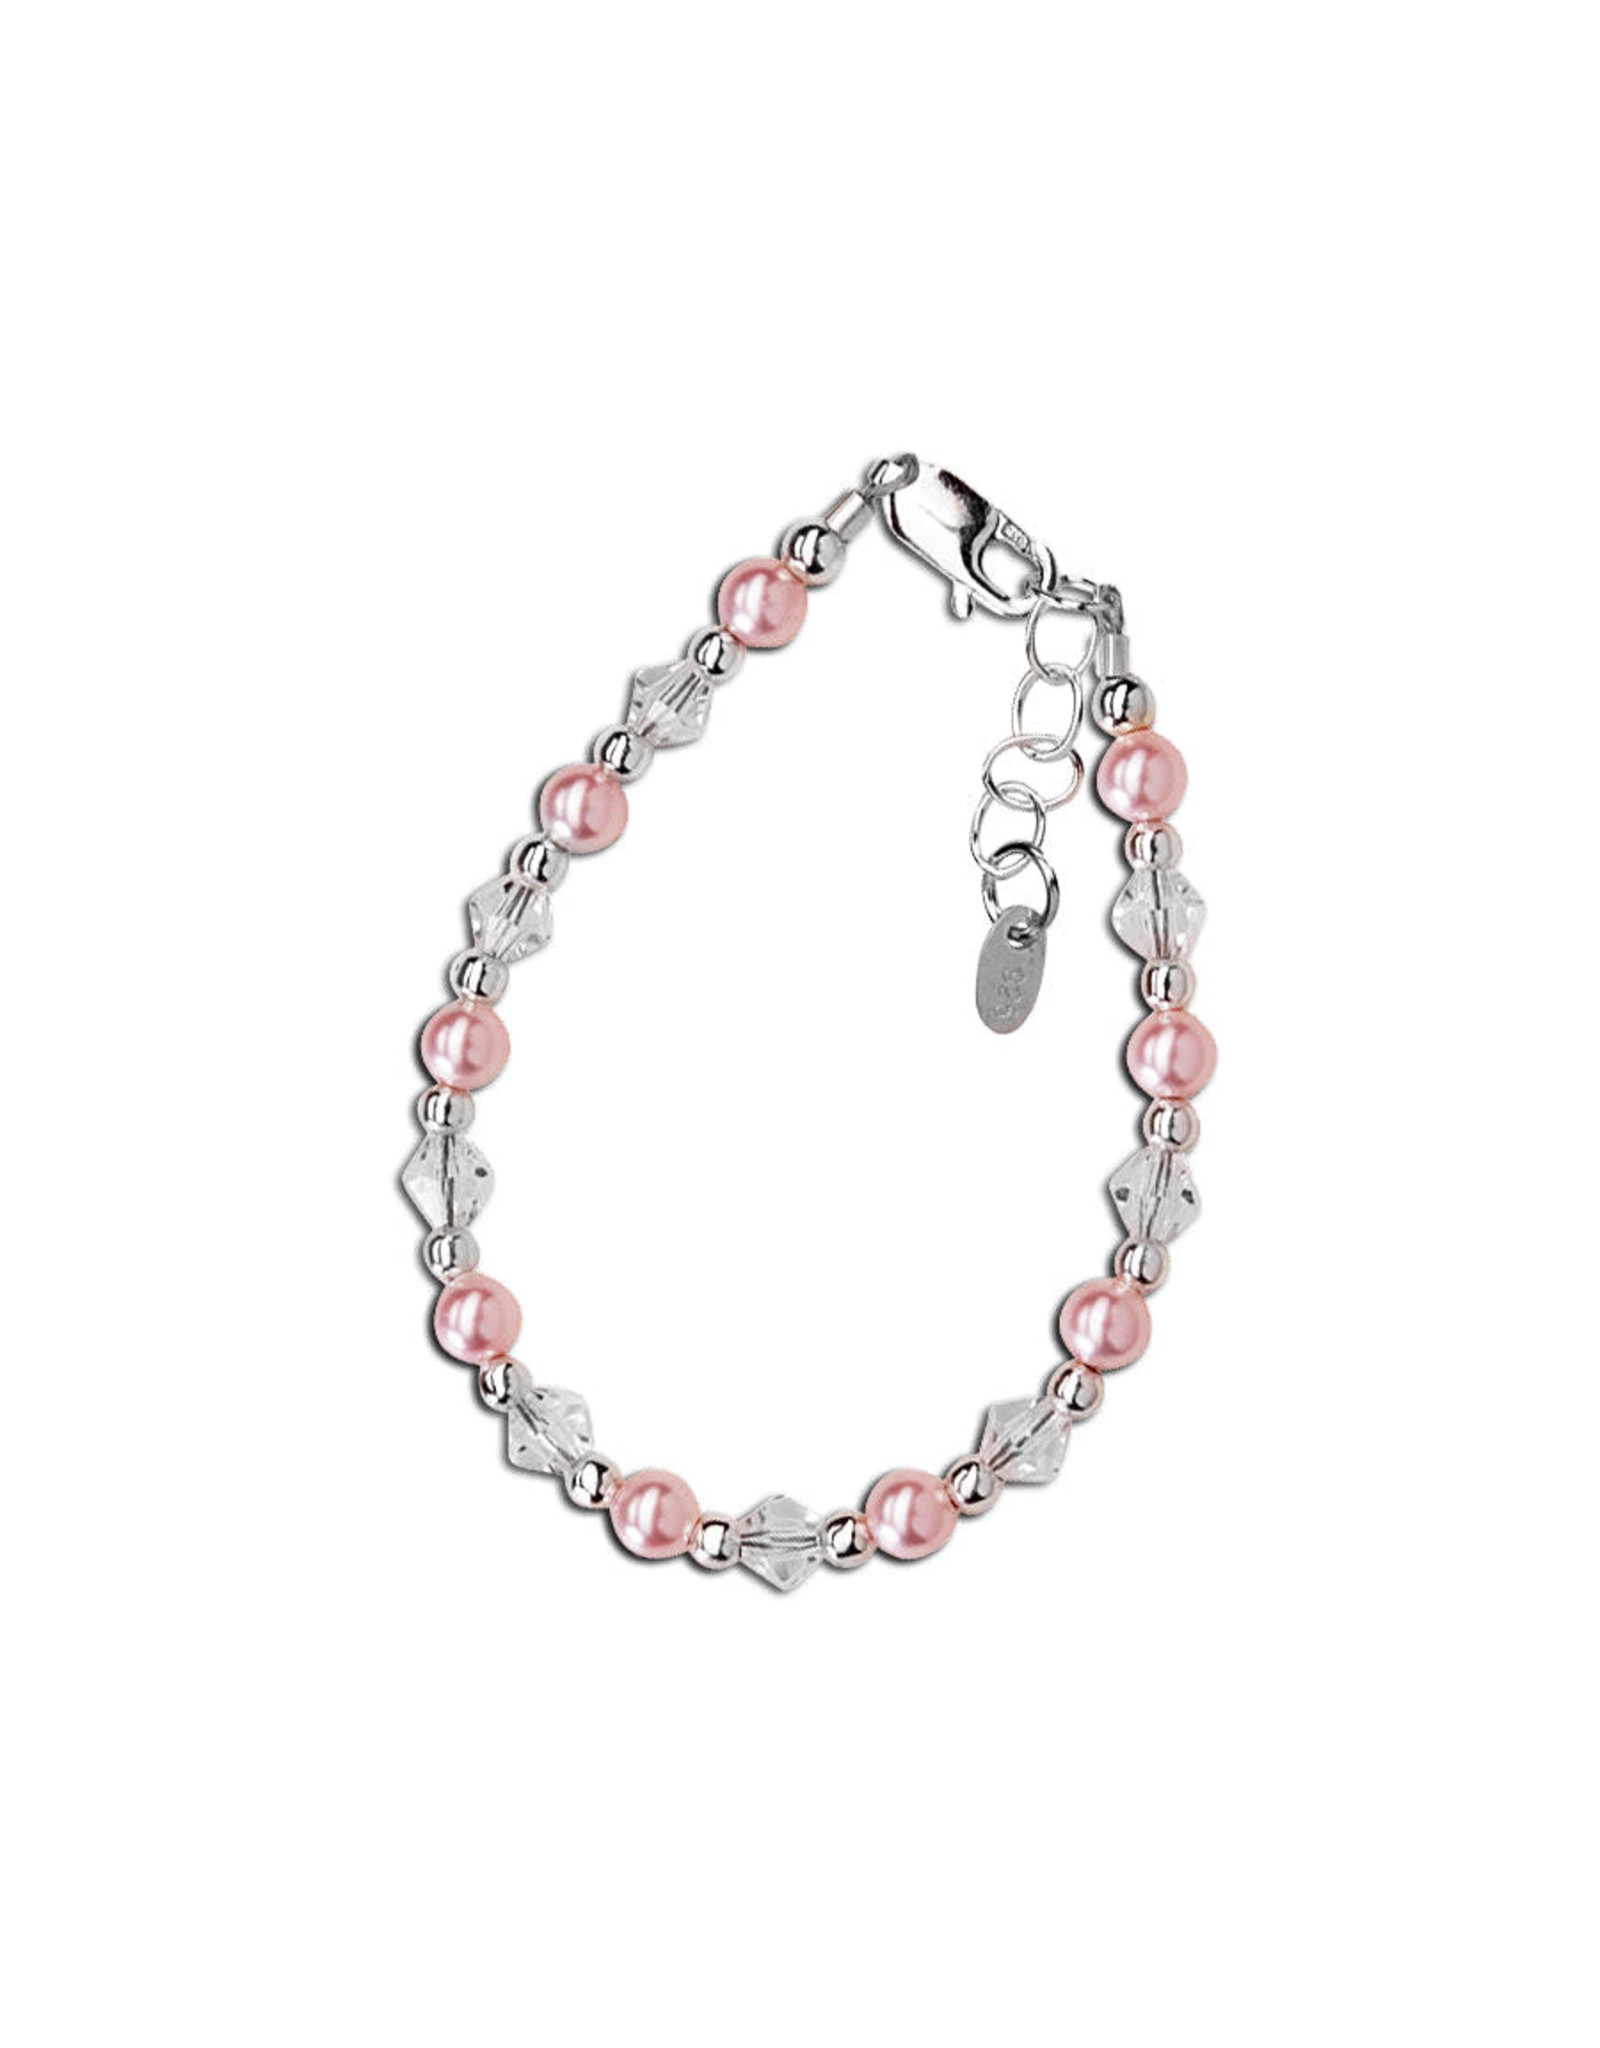 Payton Silver Bracelet with Pink Swarovski Pearls/Crystals